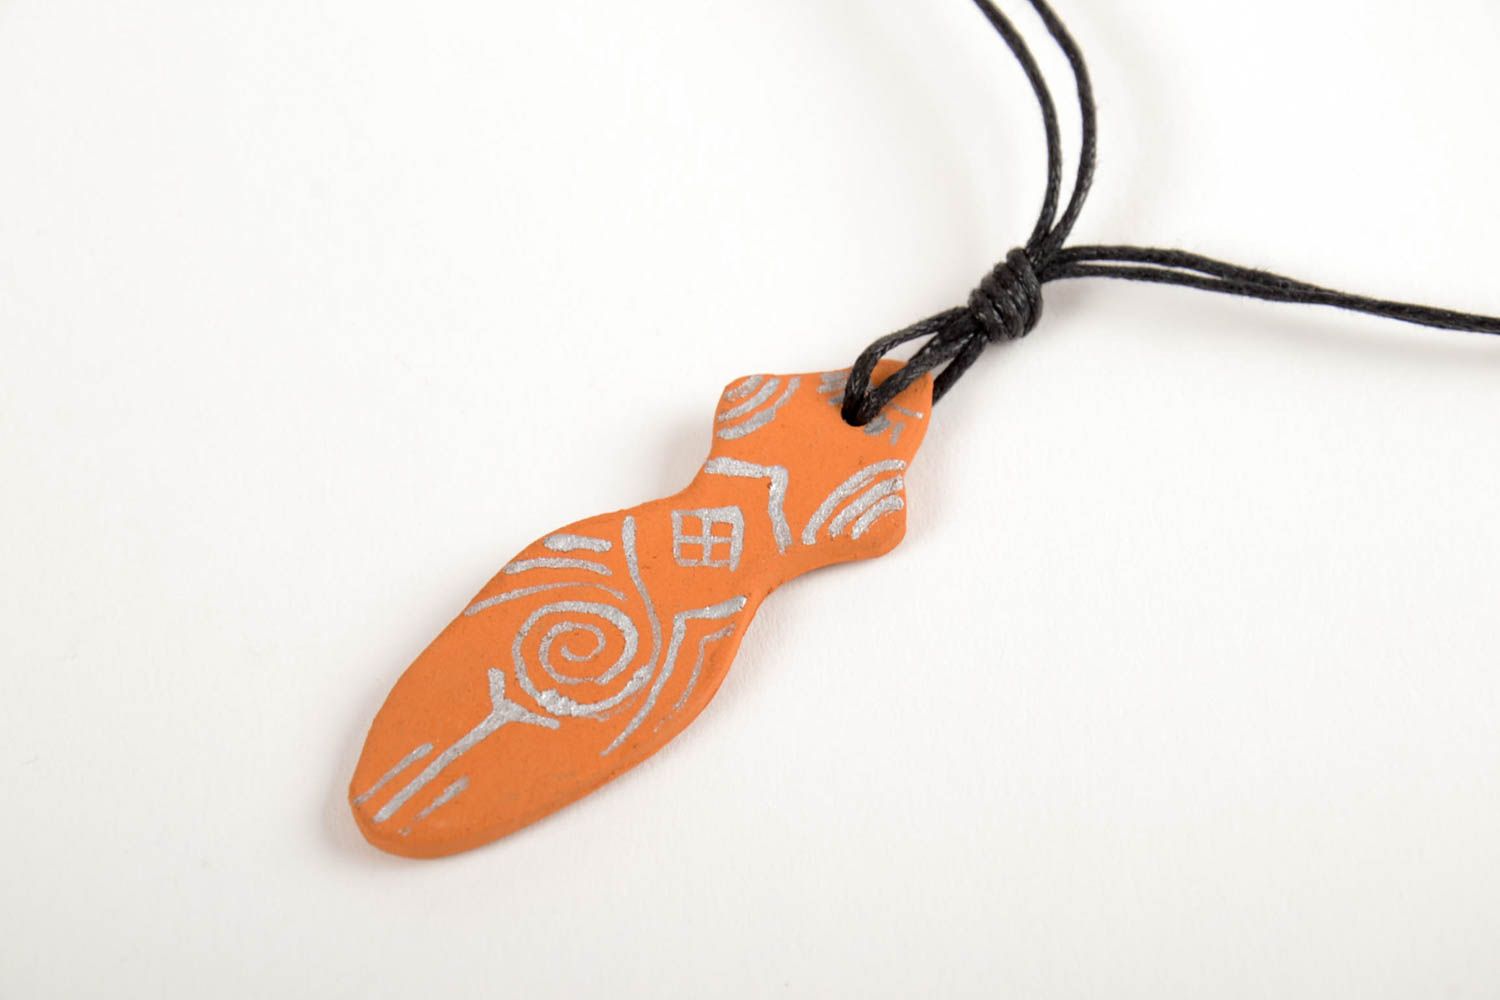 Handmade pendant designer pendant unusual accessory clay pendant gift ideas photo 4